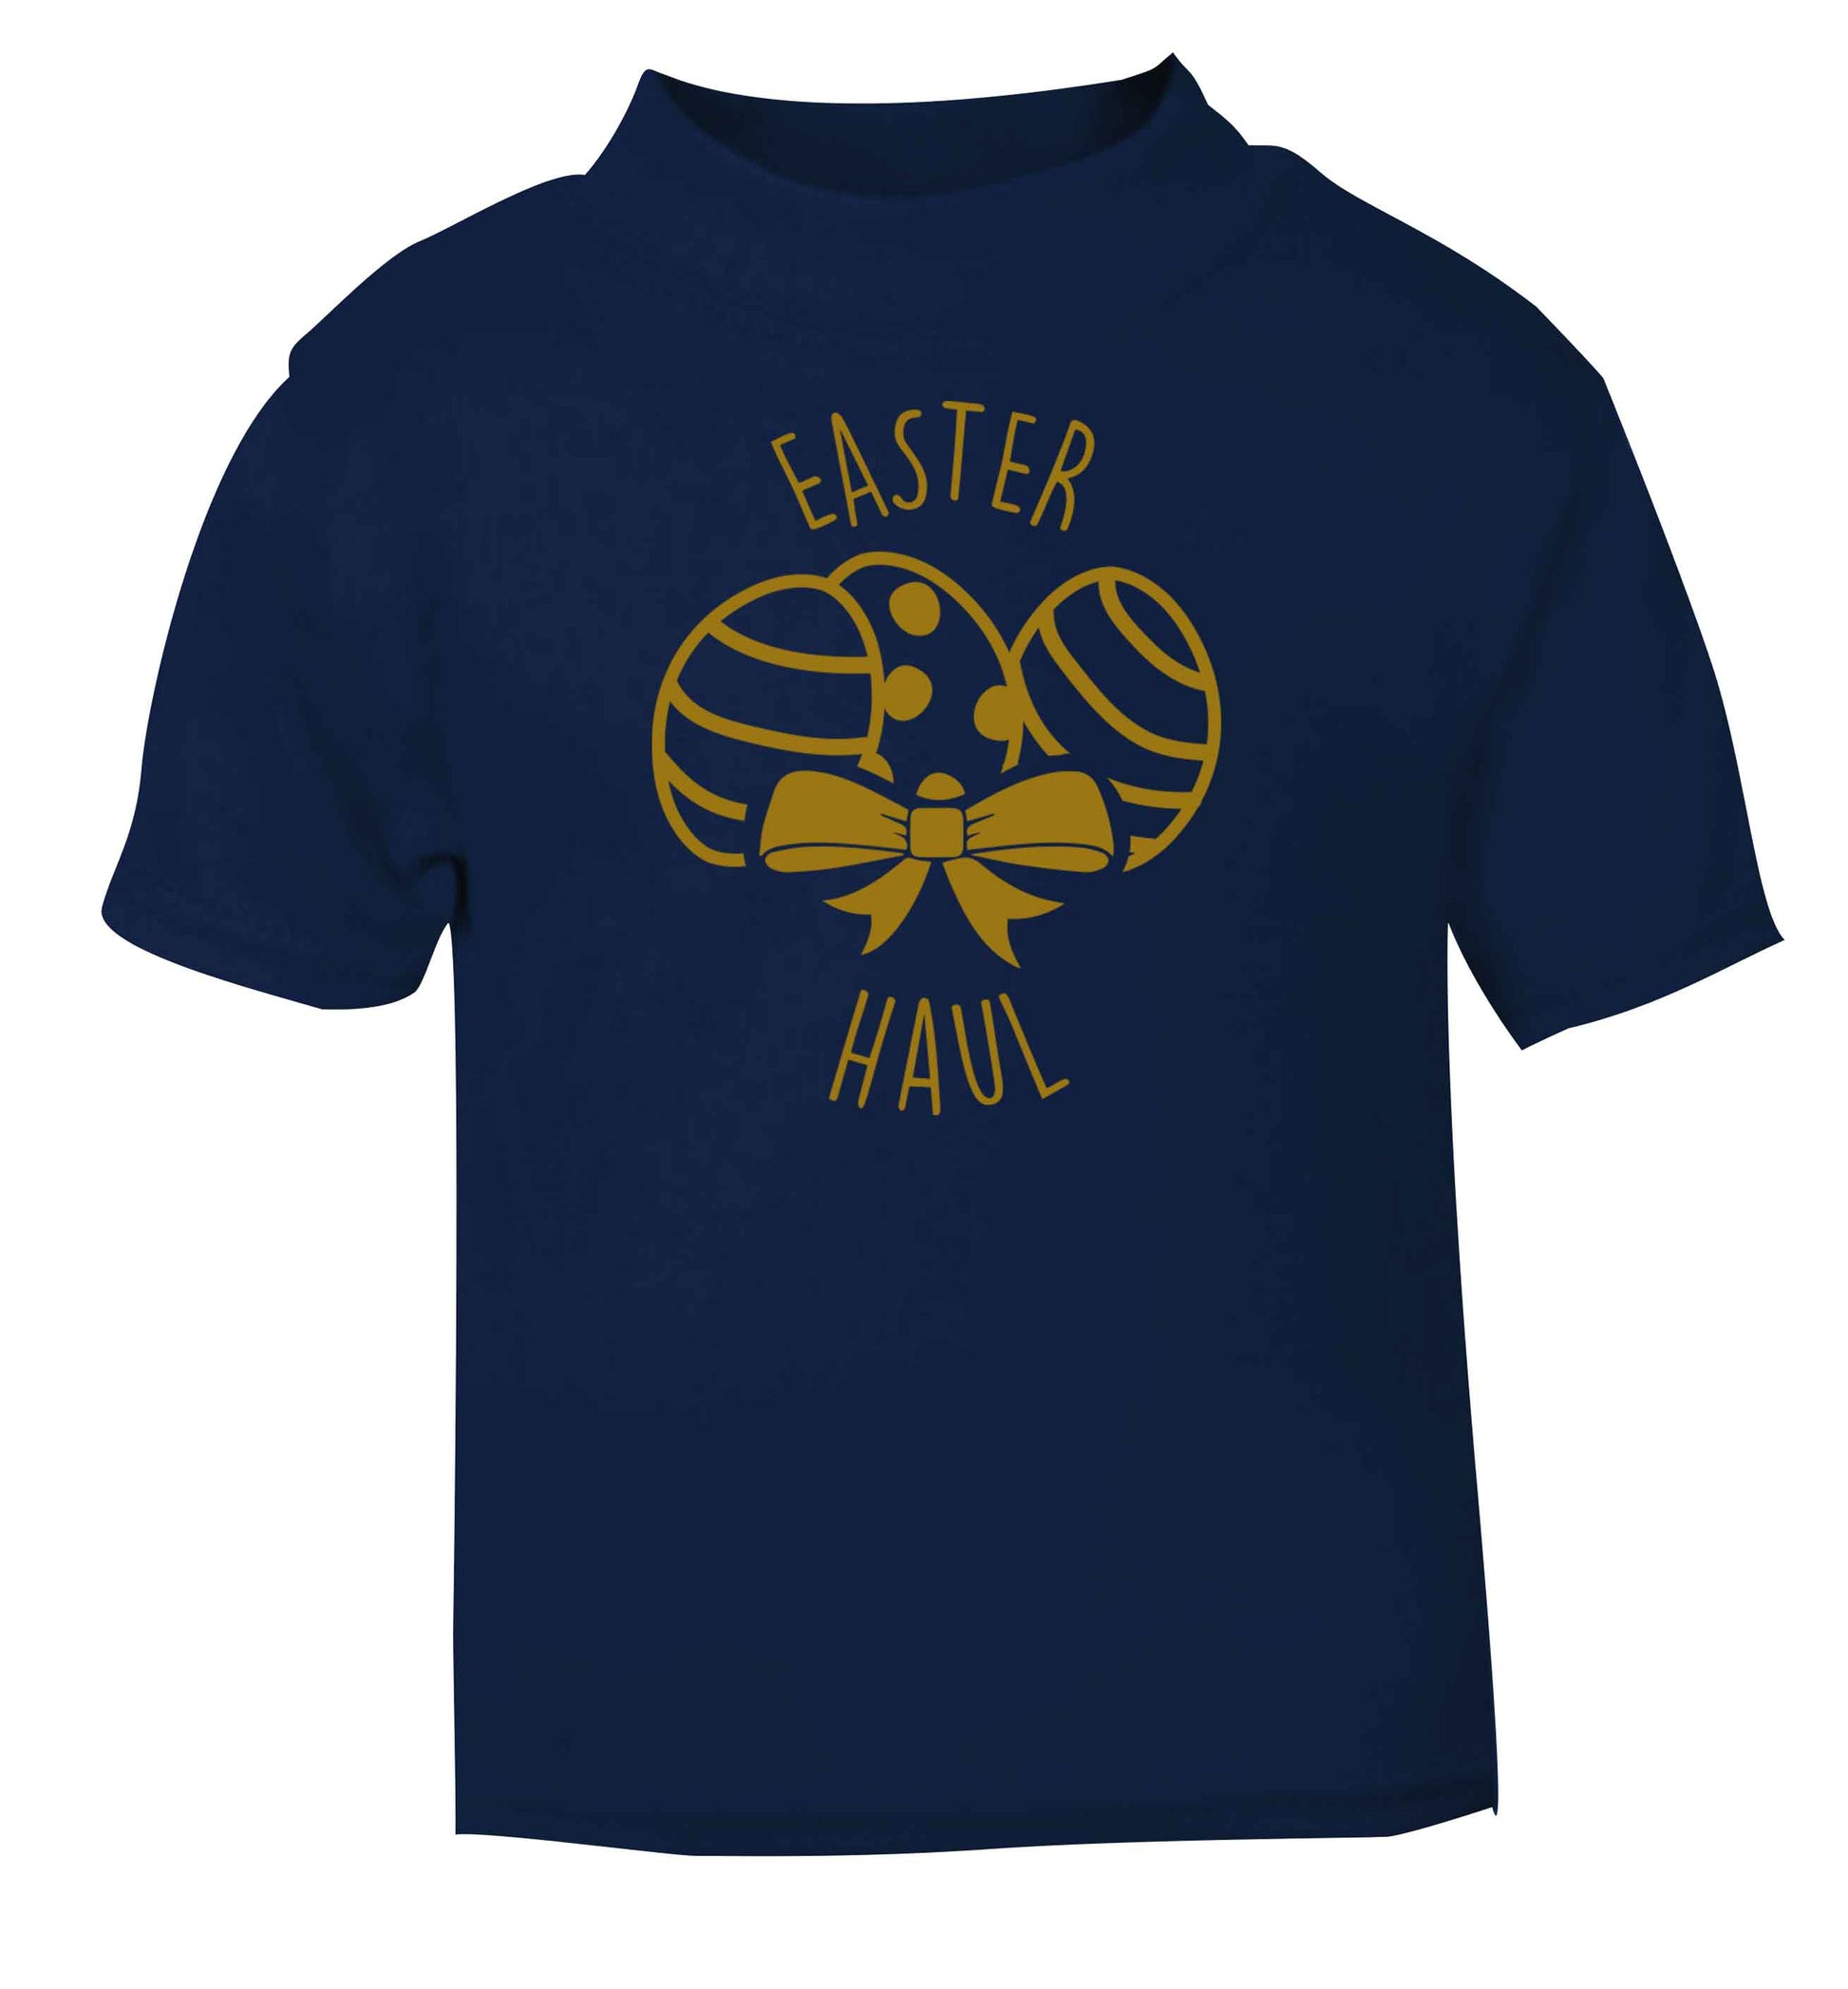 Easter haul navy baby toddler Tshirt 2 Years